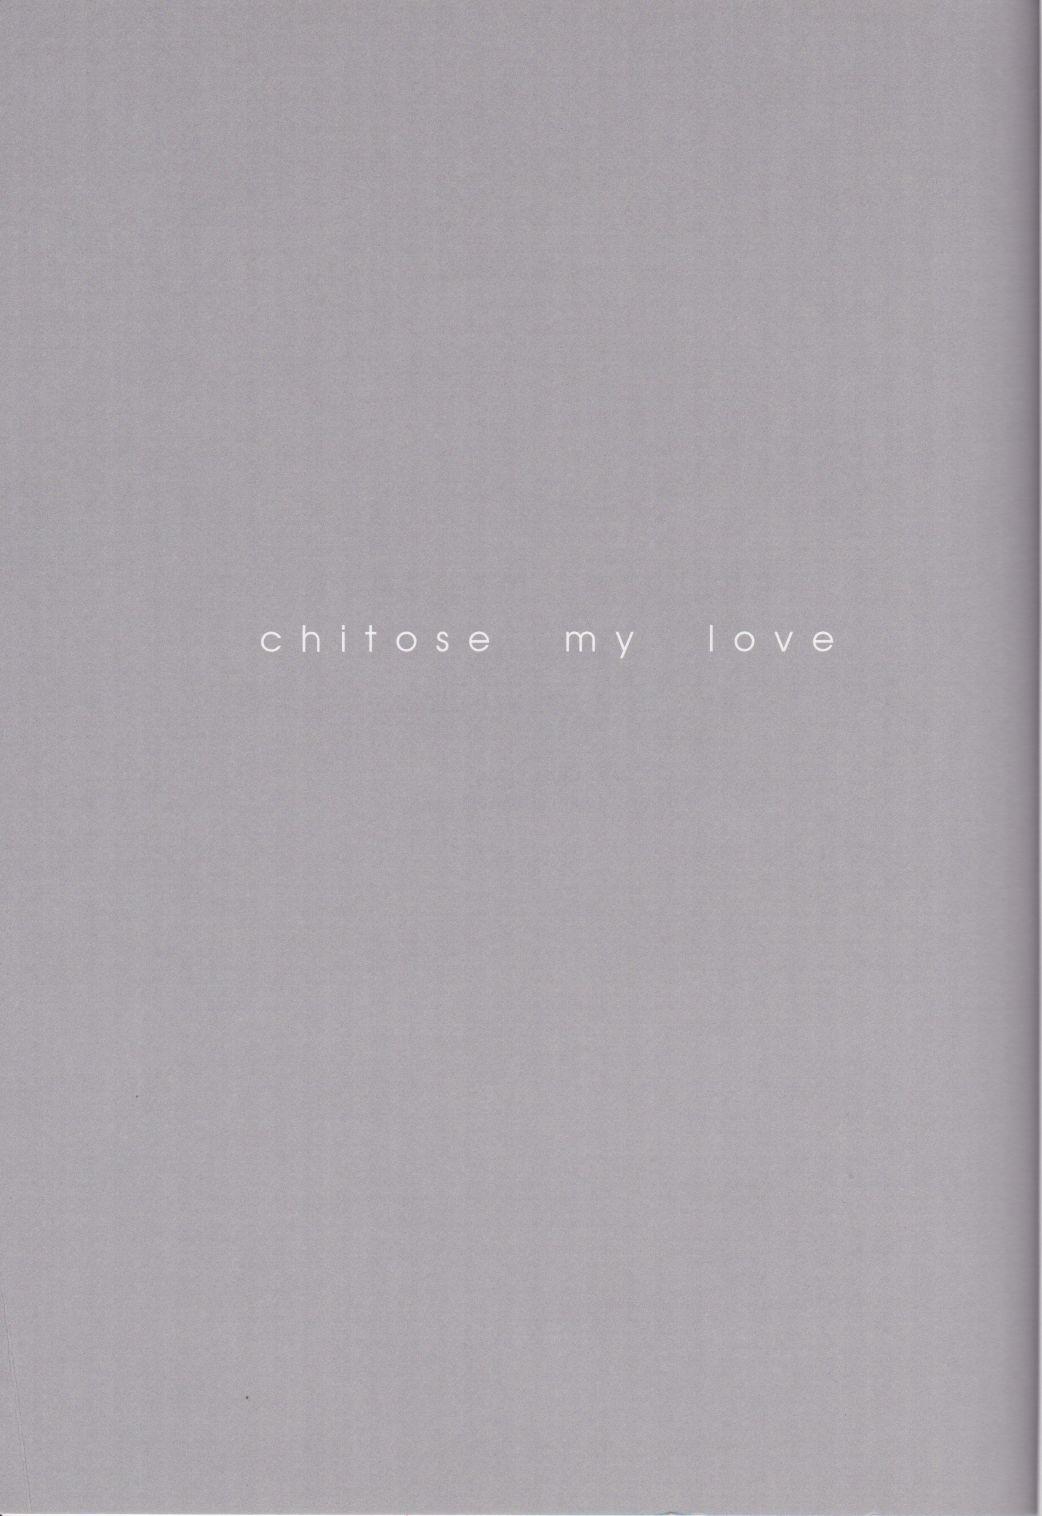 Chitose my love 23